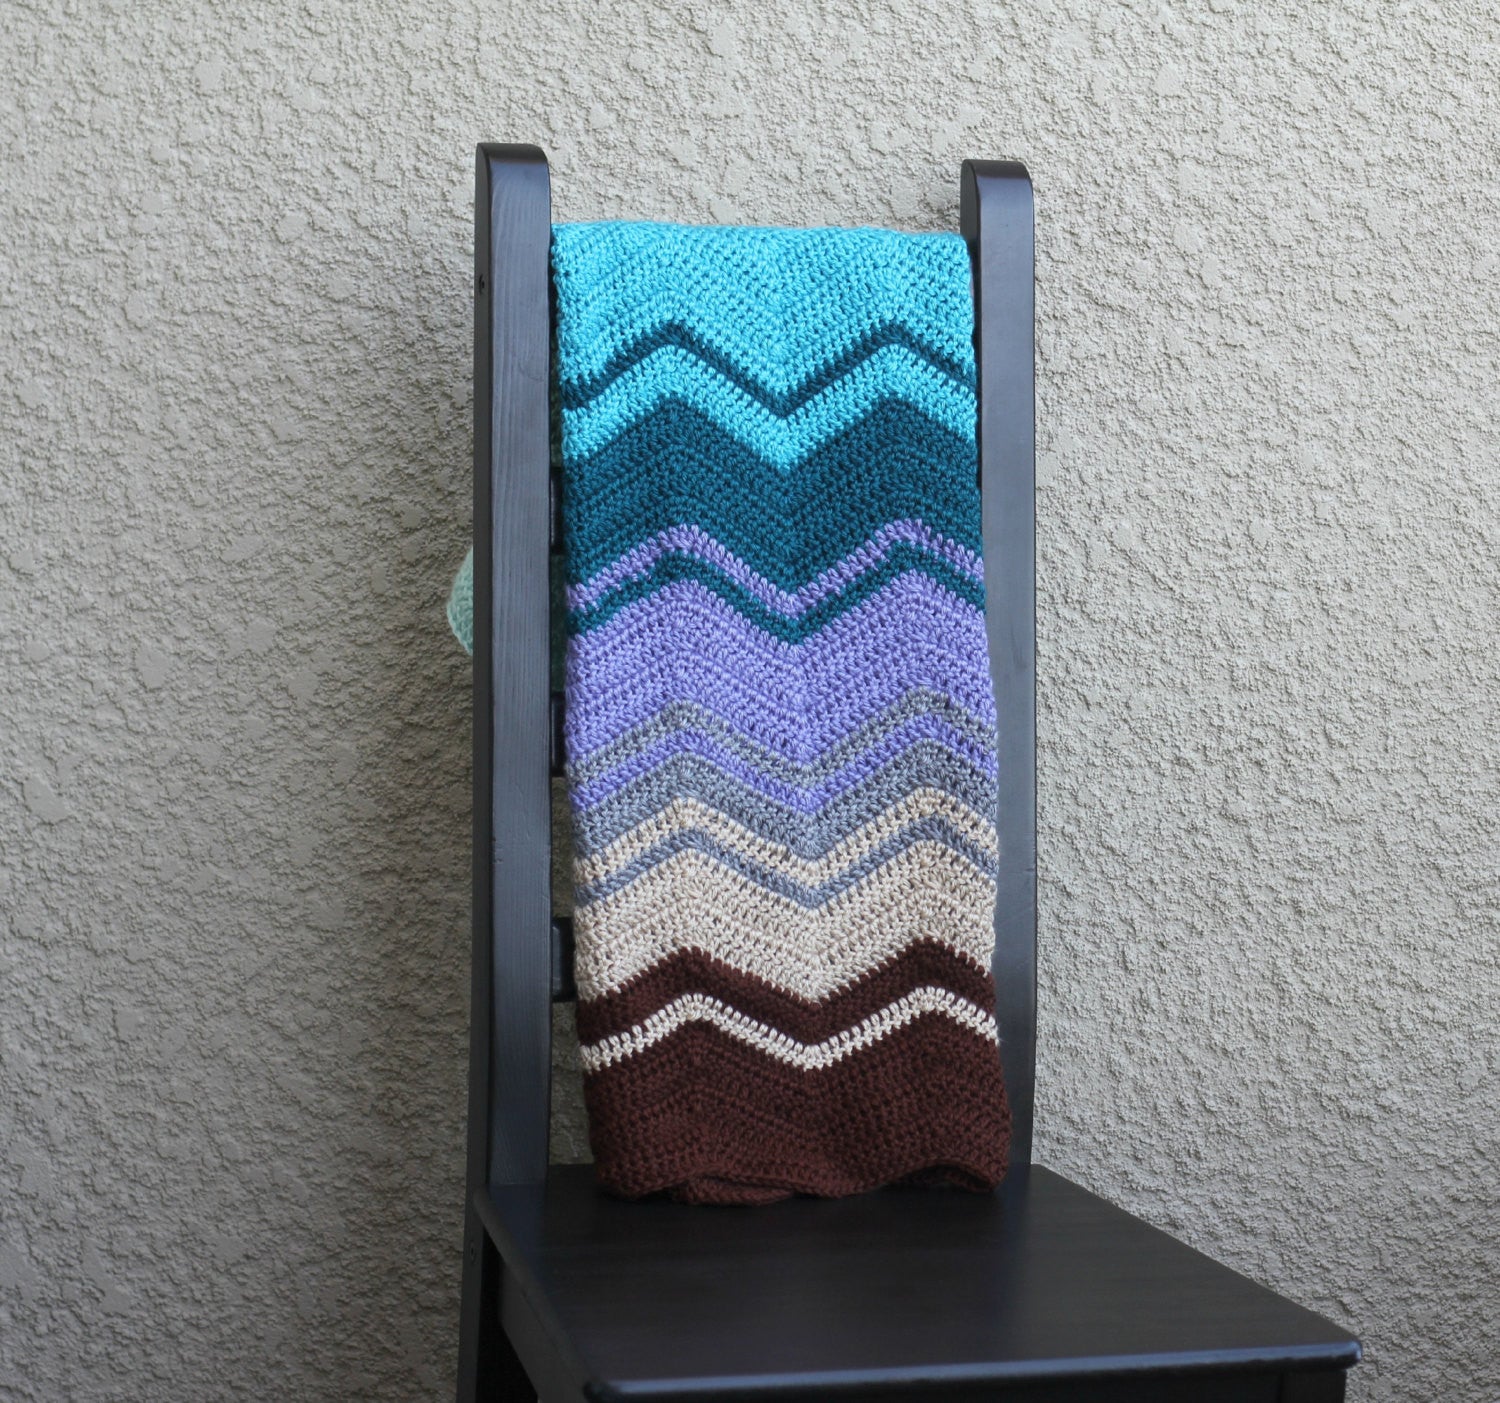 Crochet chevron baby blanket